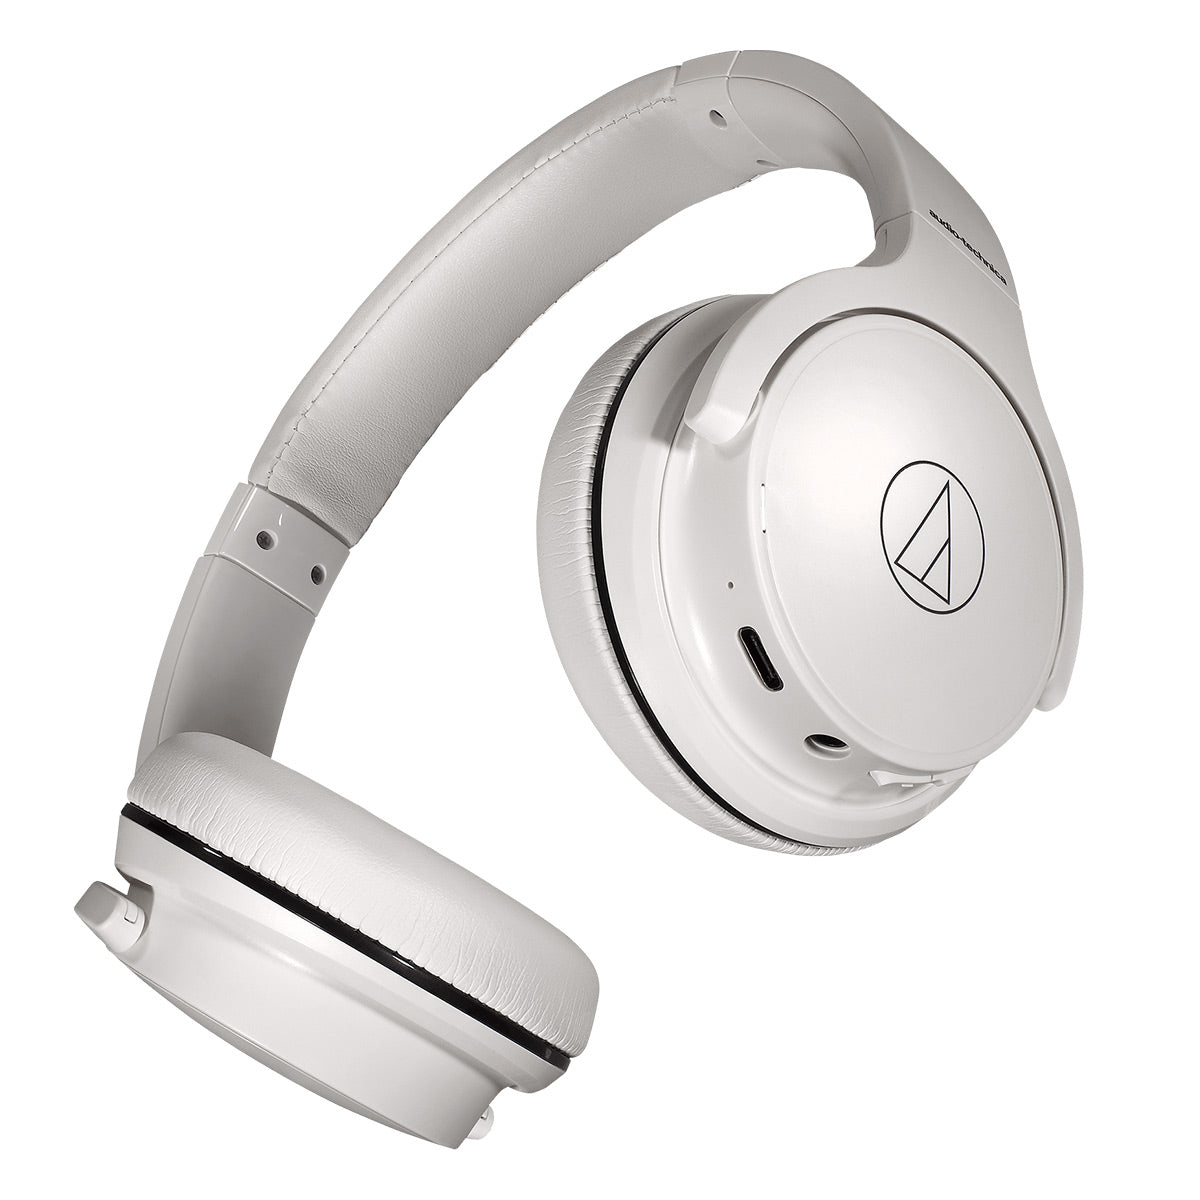 AudioTechnica ATH-S220BT Wireless On-Ear Headphones (White)